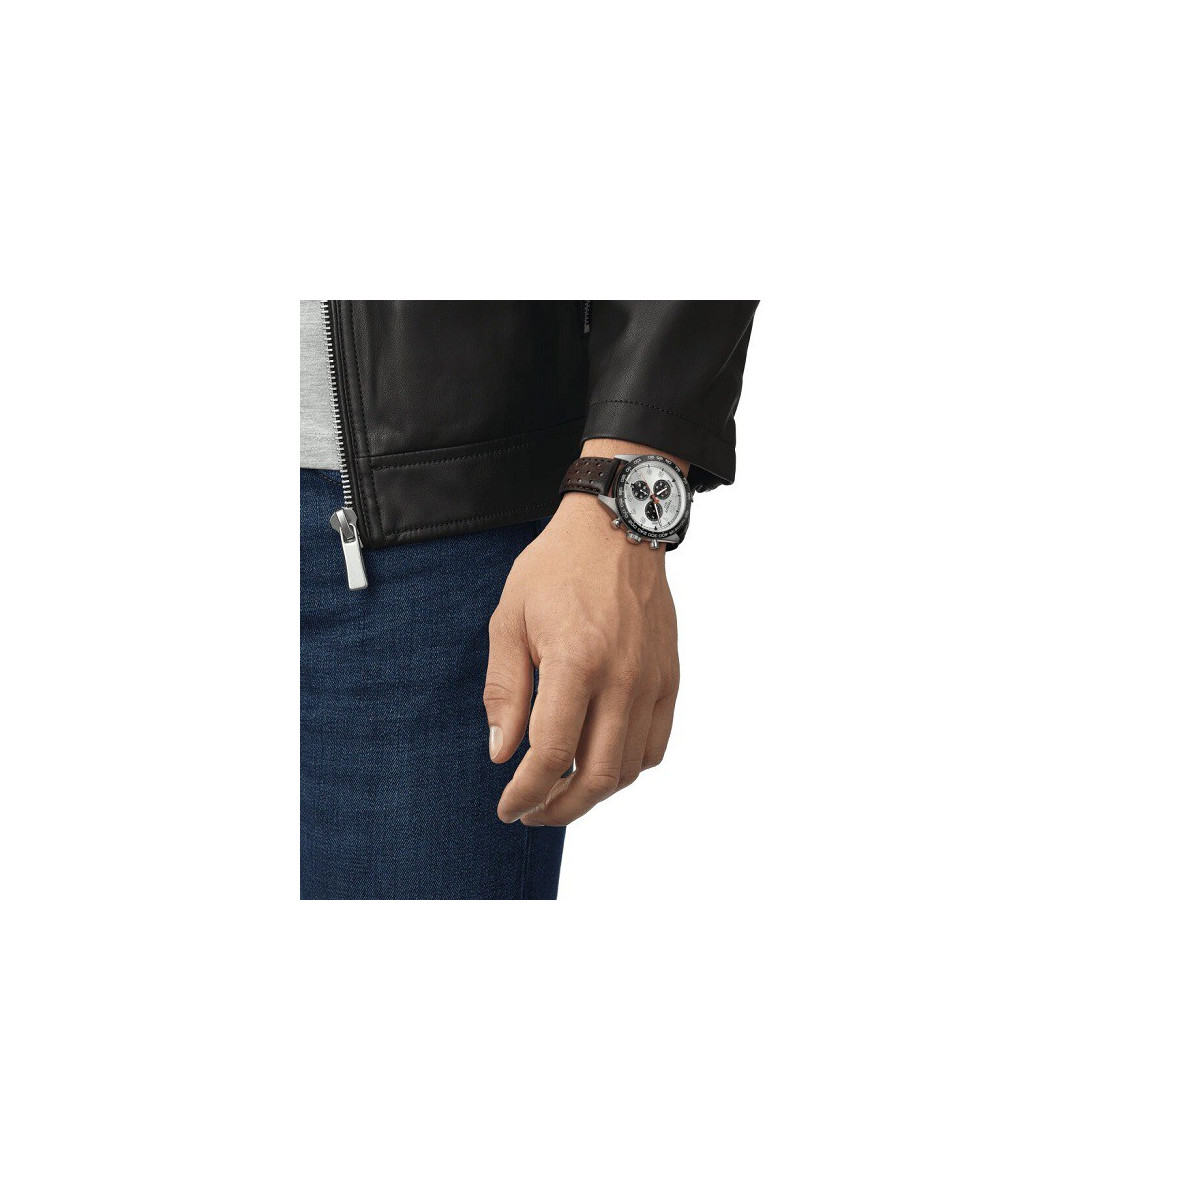 Reloj Tissot PRS516 Crono Cuarzo para caballero